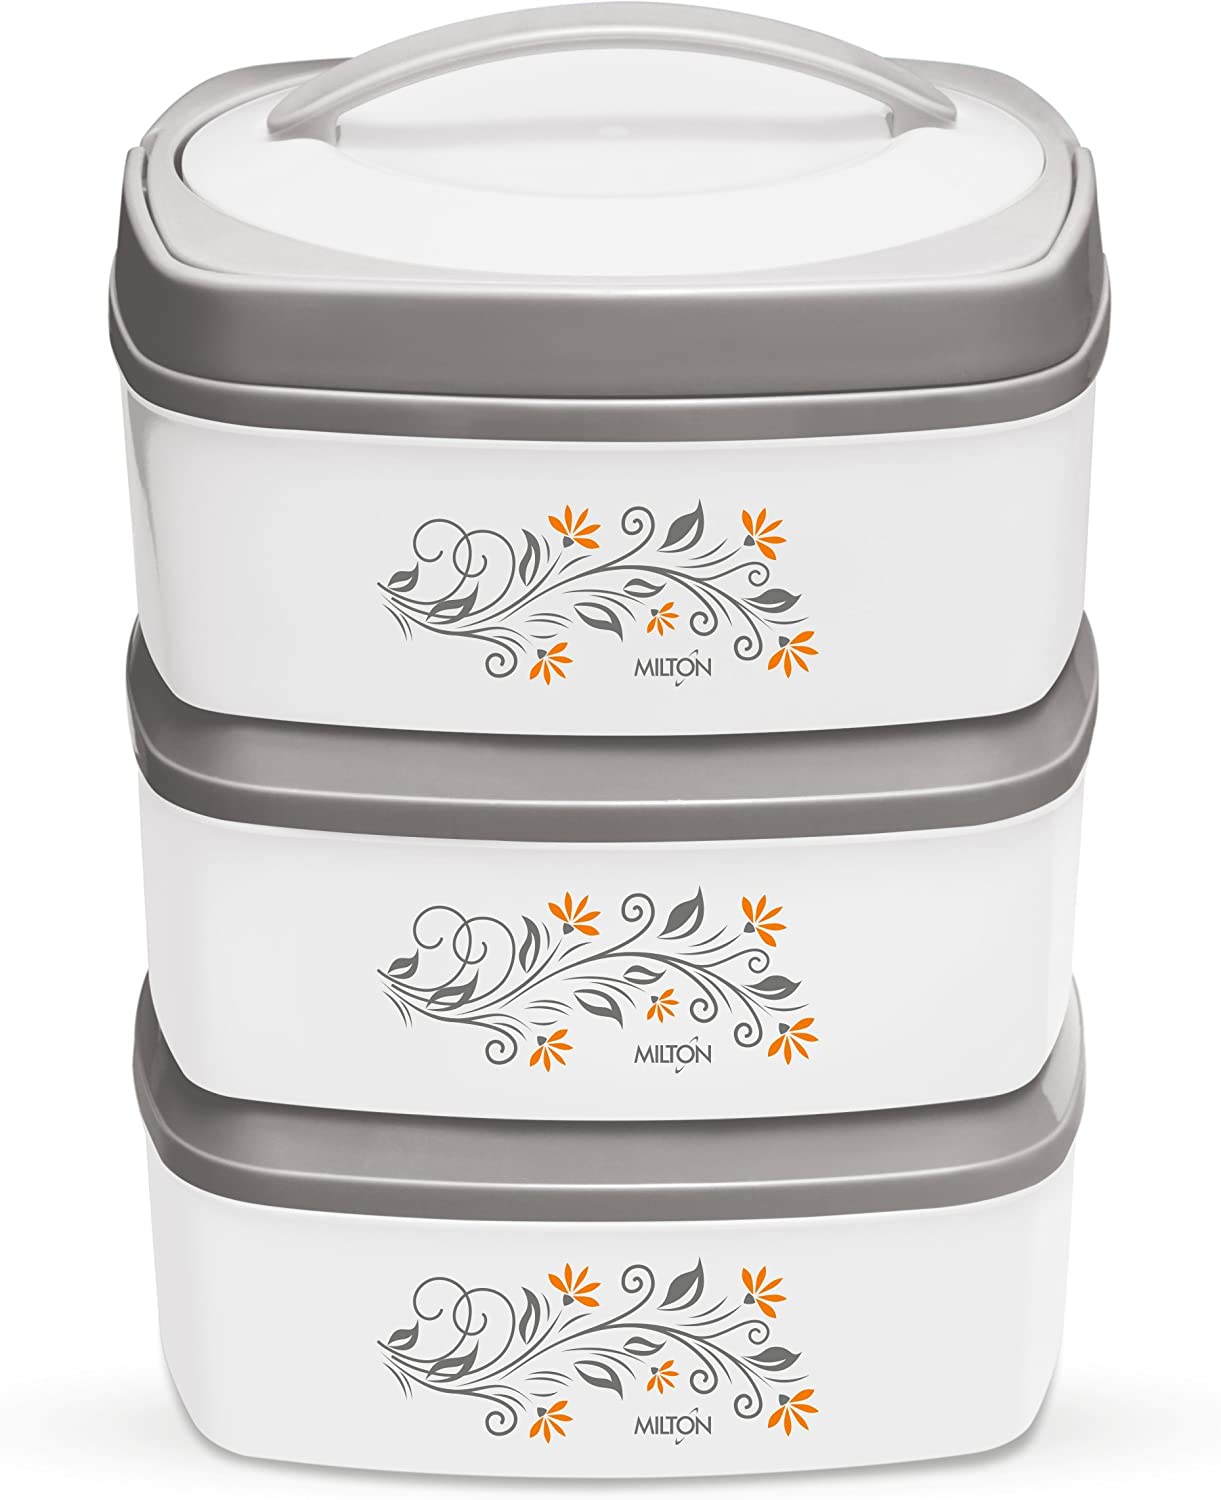 Pack of 3 Pcs Milton Hot Pot Set - White and Orange